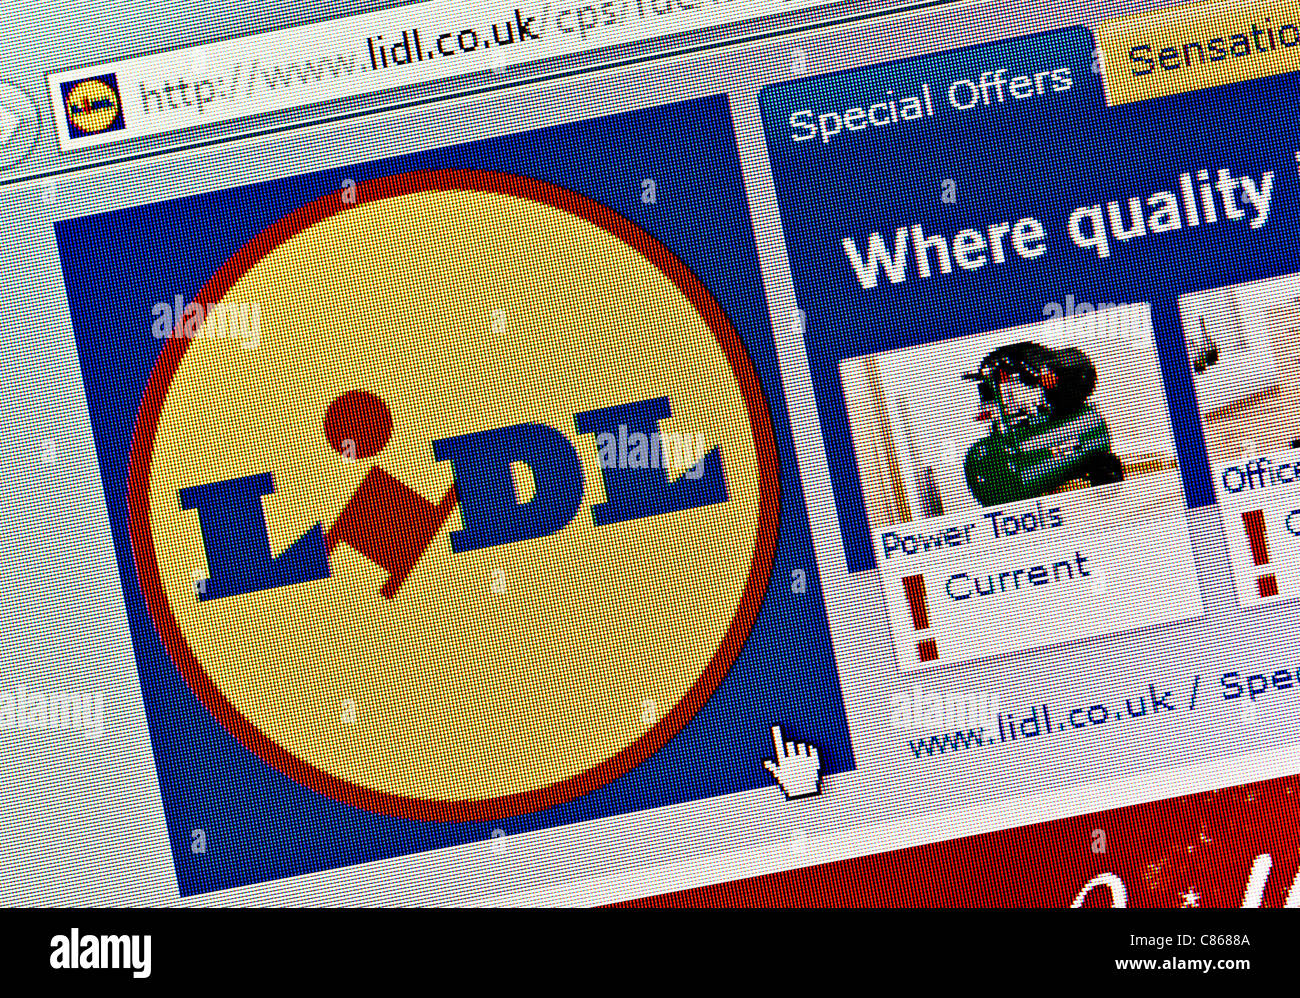 Lidl supermarket logo and website close up Stock Photo